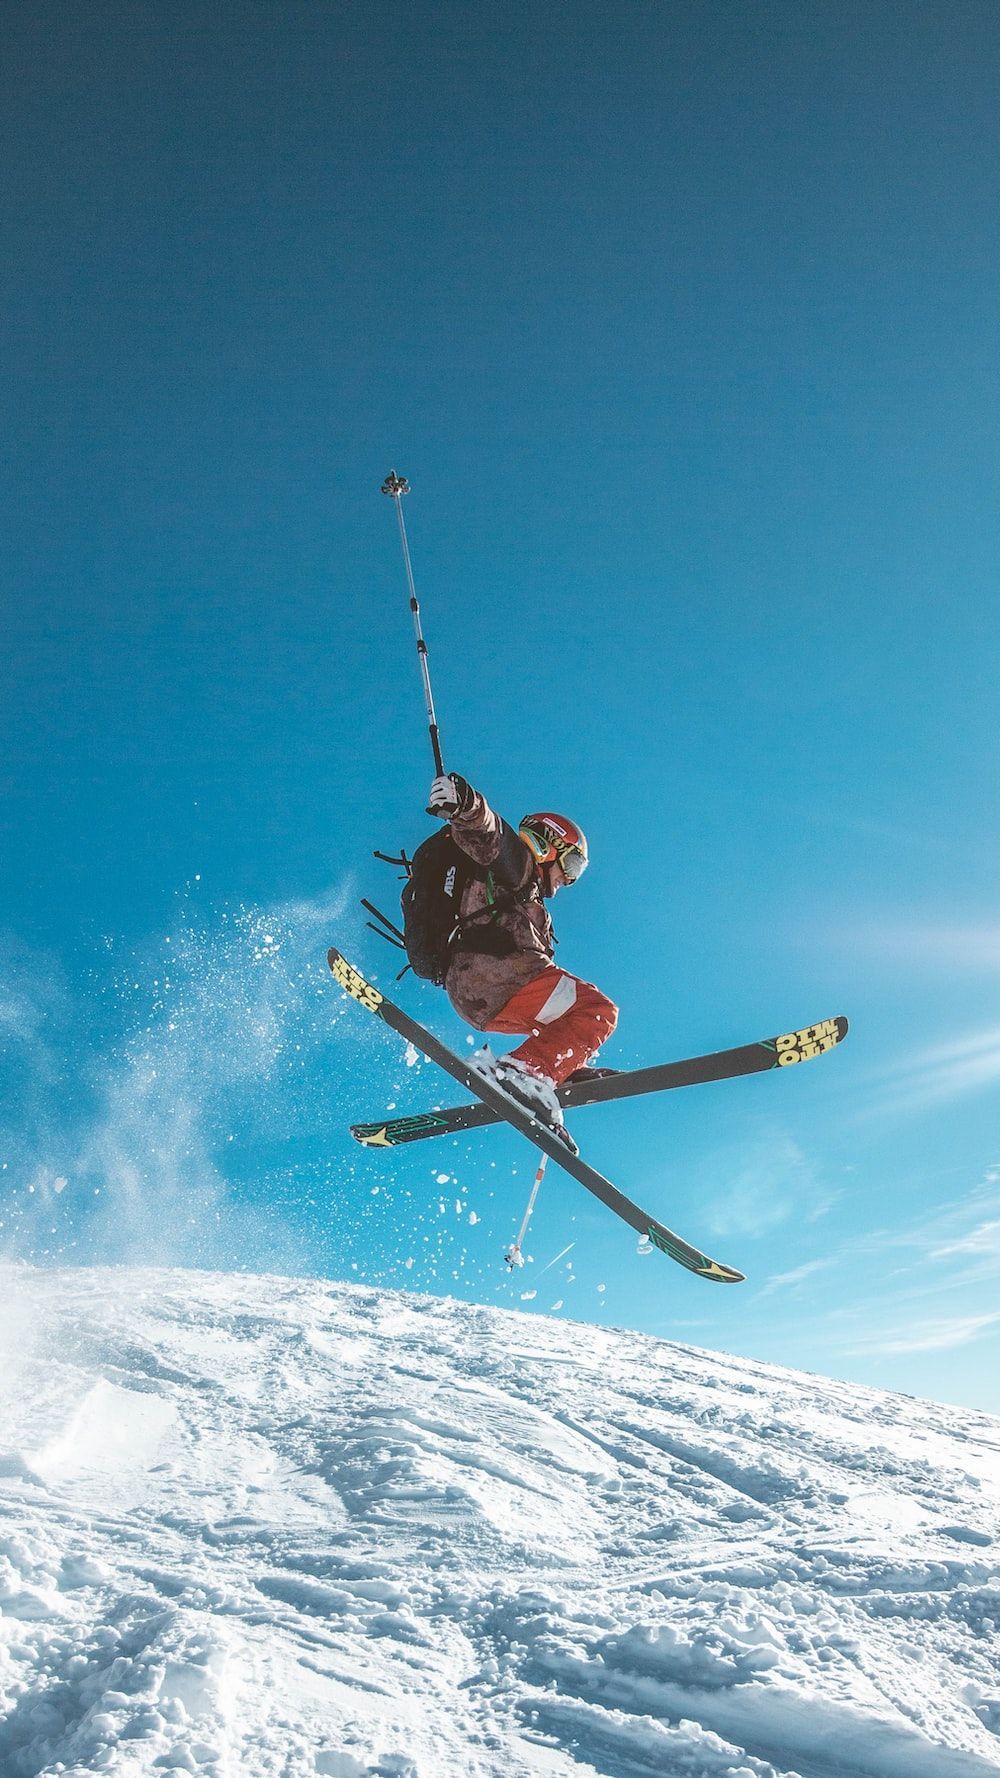 Ski Picture. Download Free Image